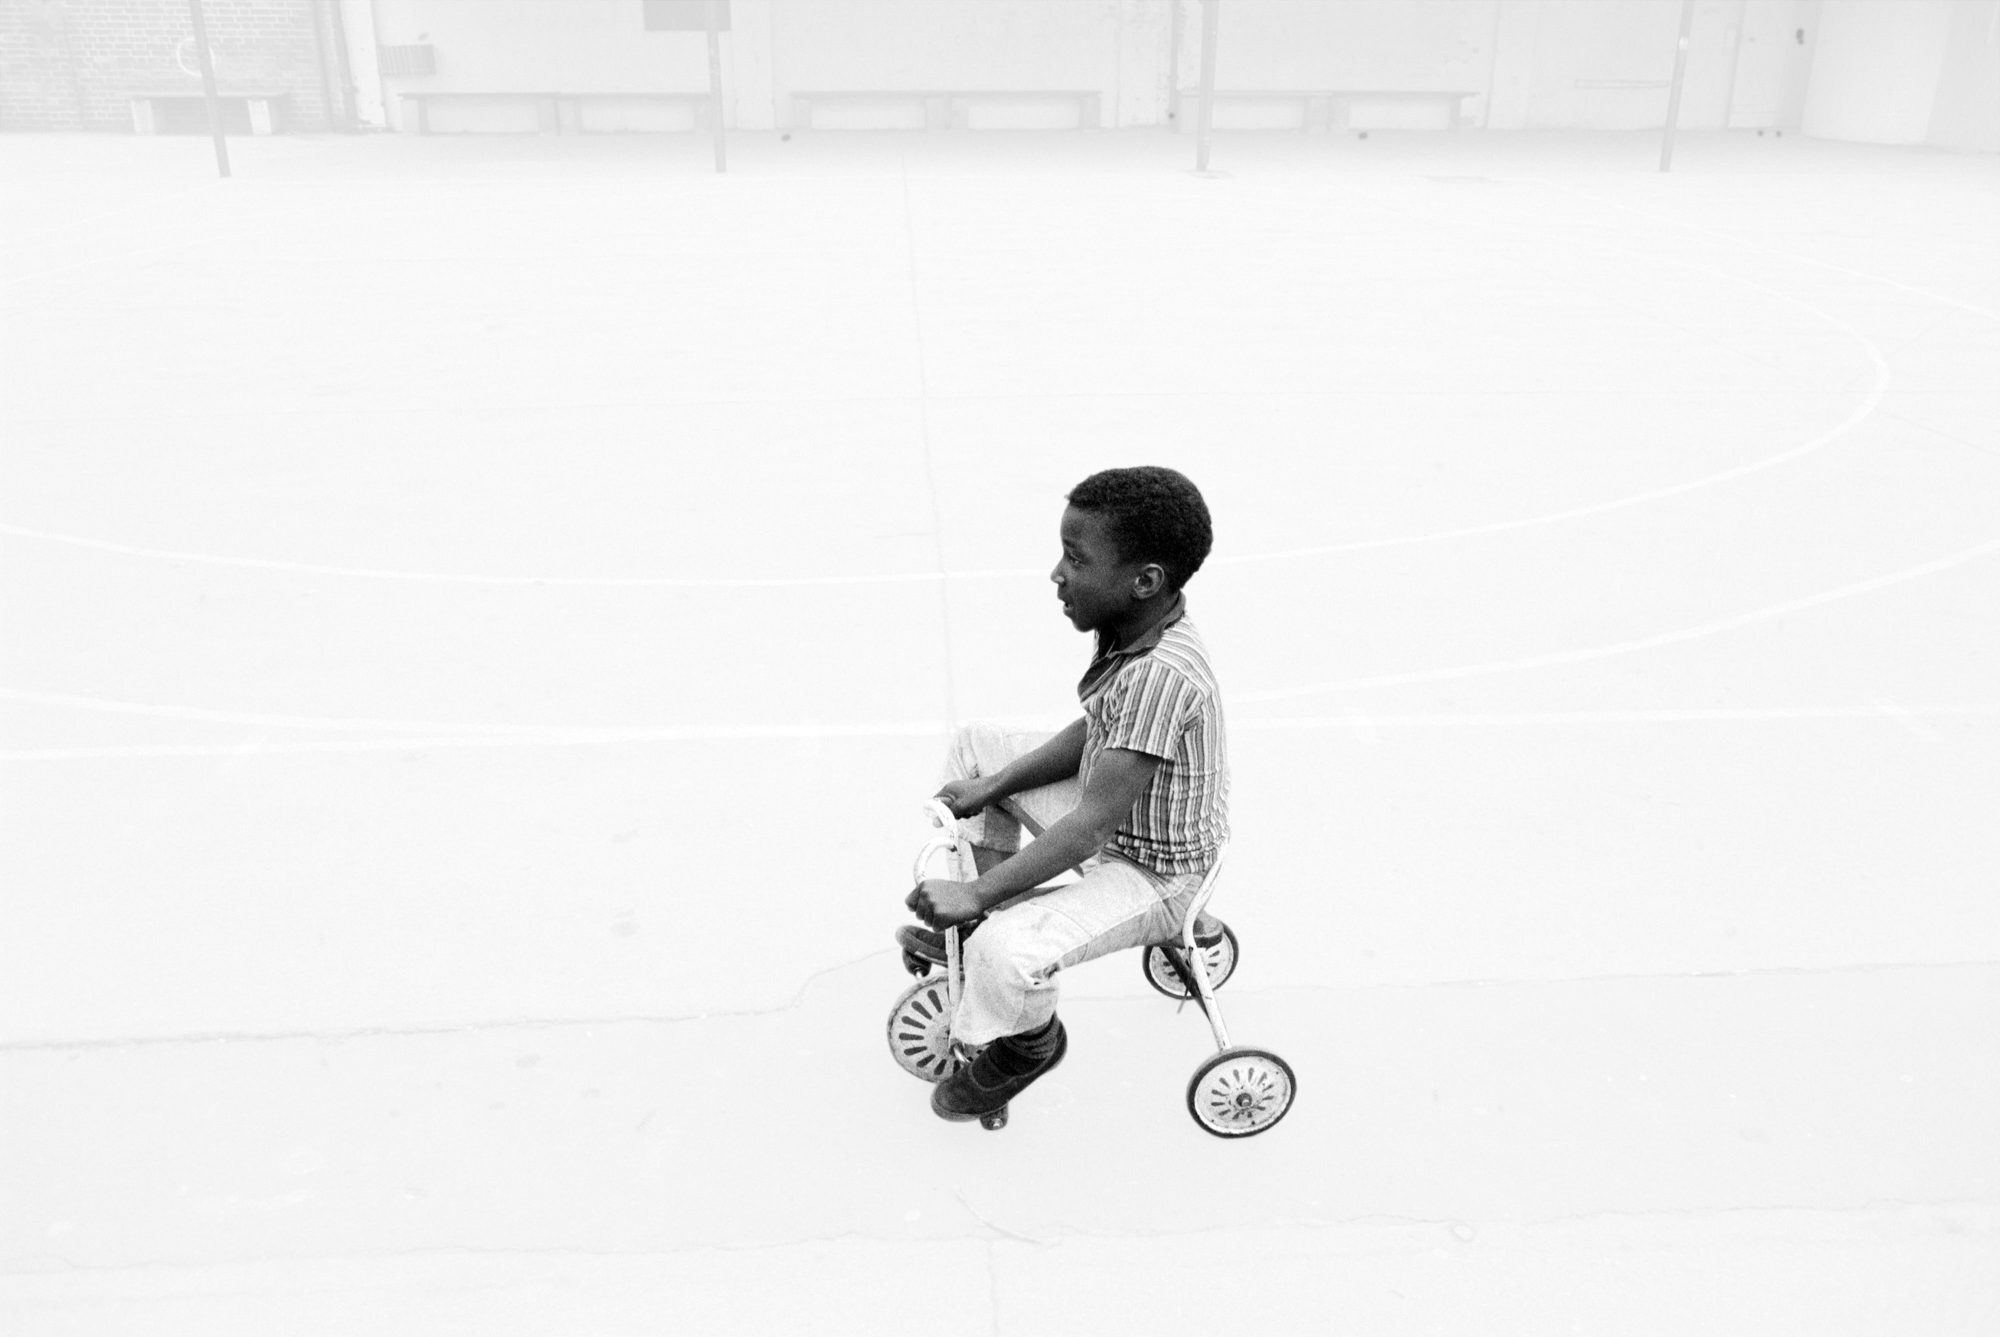 <span class="u-italic400">Boy tricycle</span><br>© Dennis Morris 